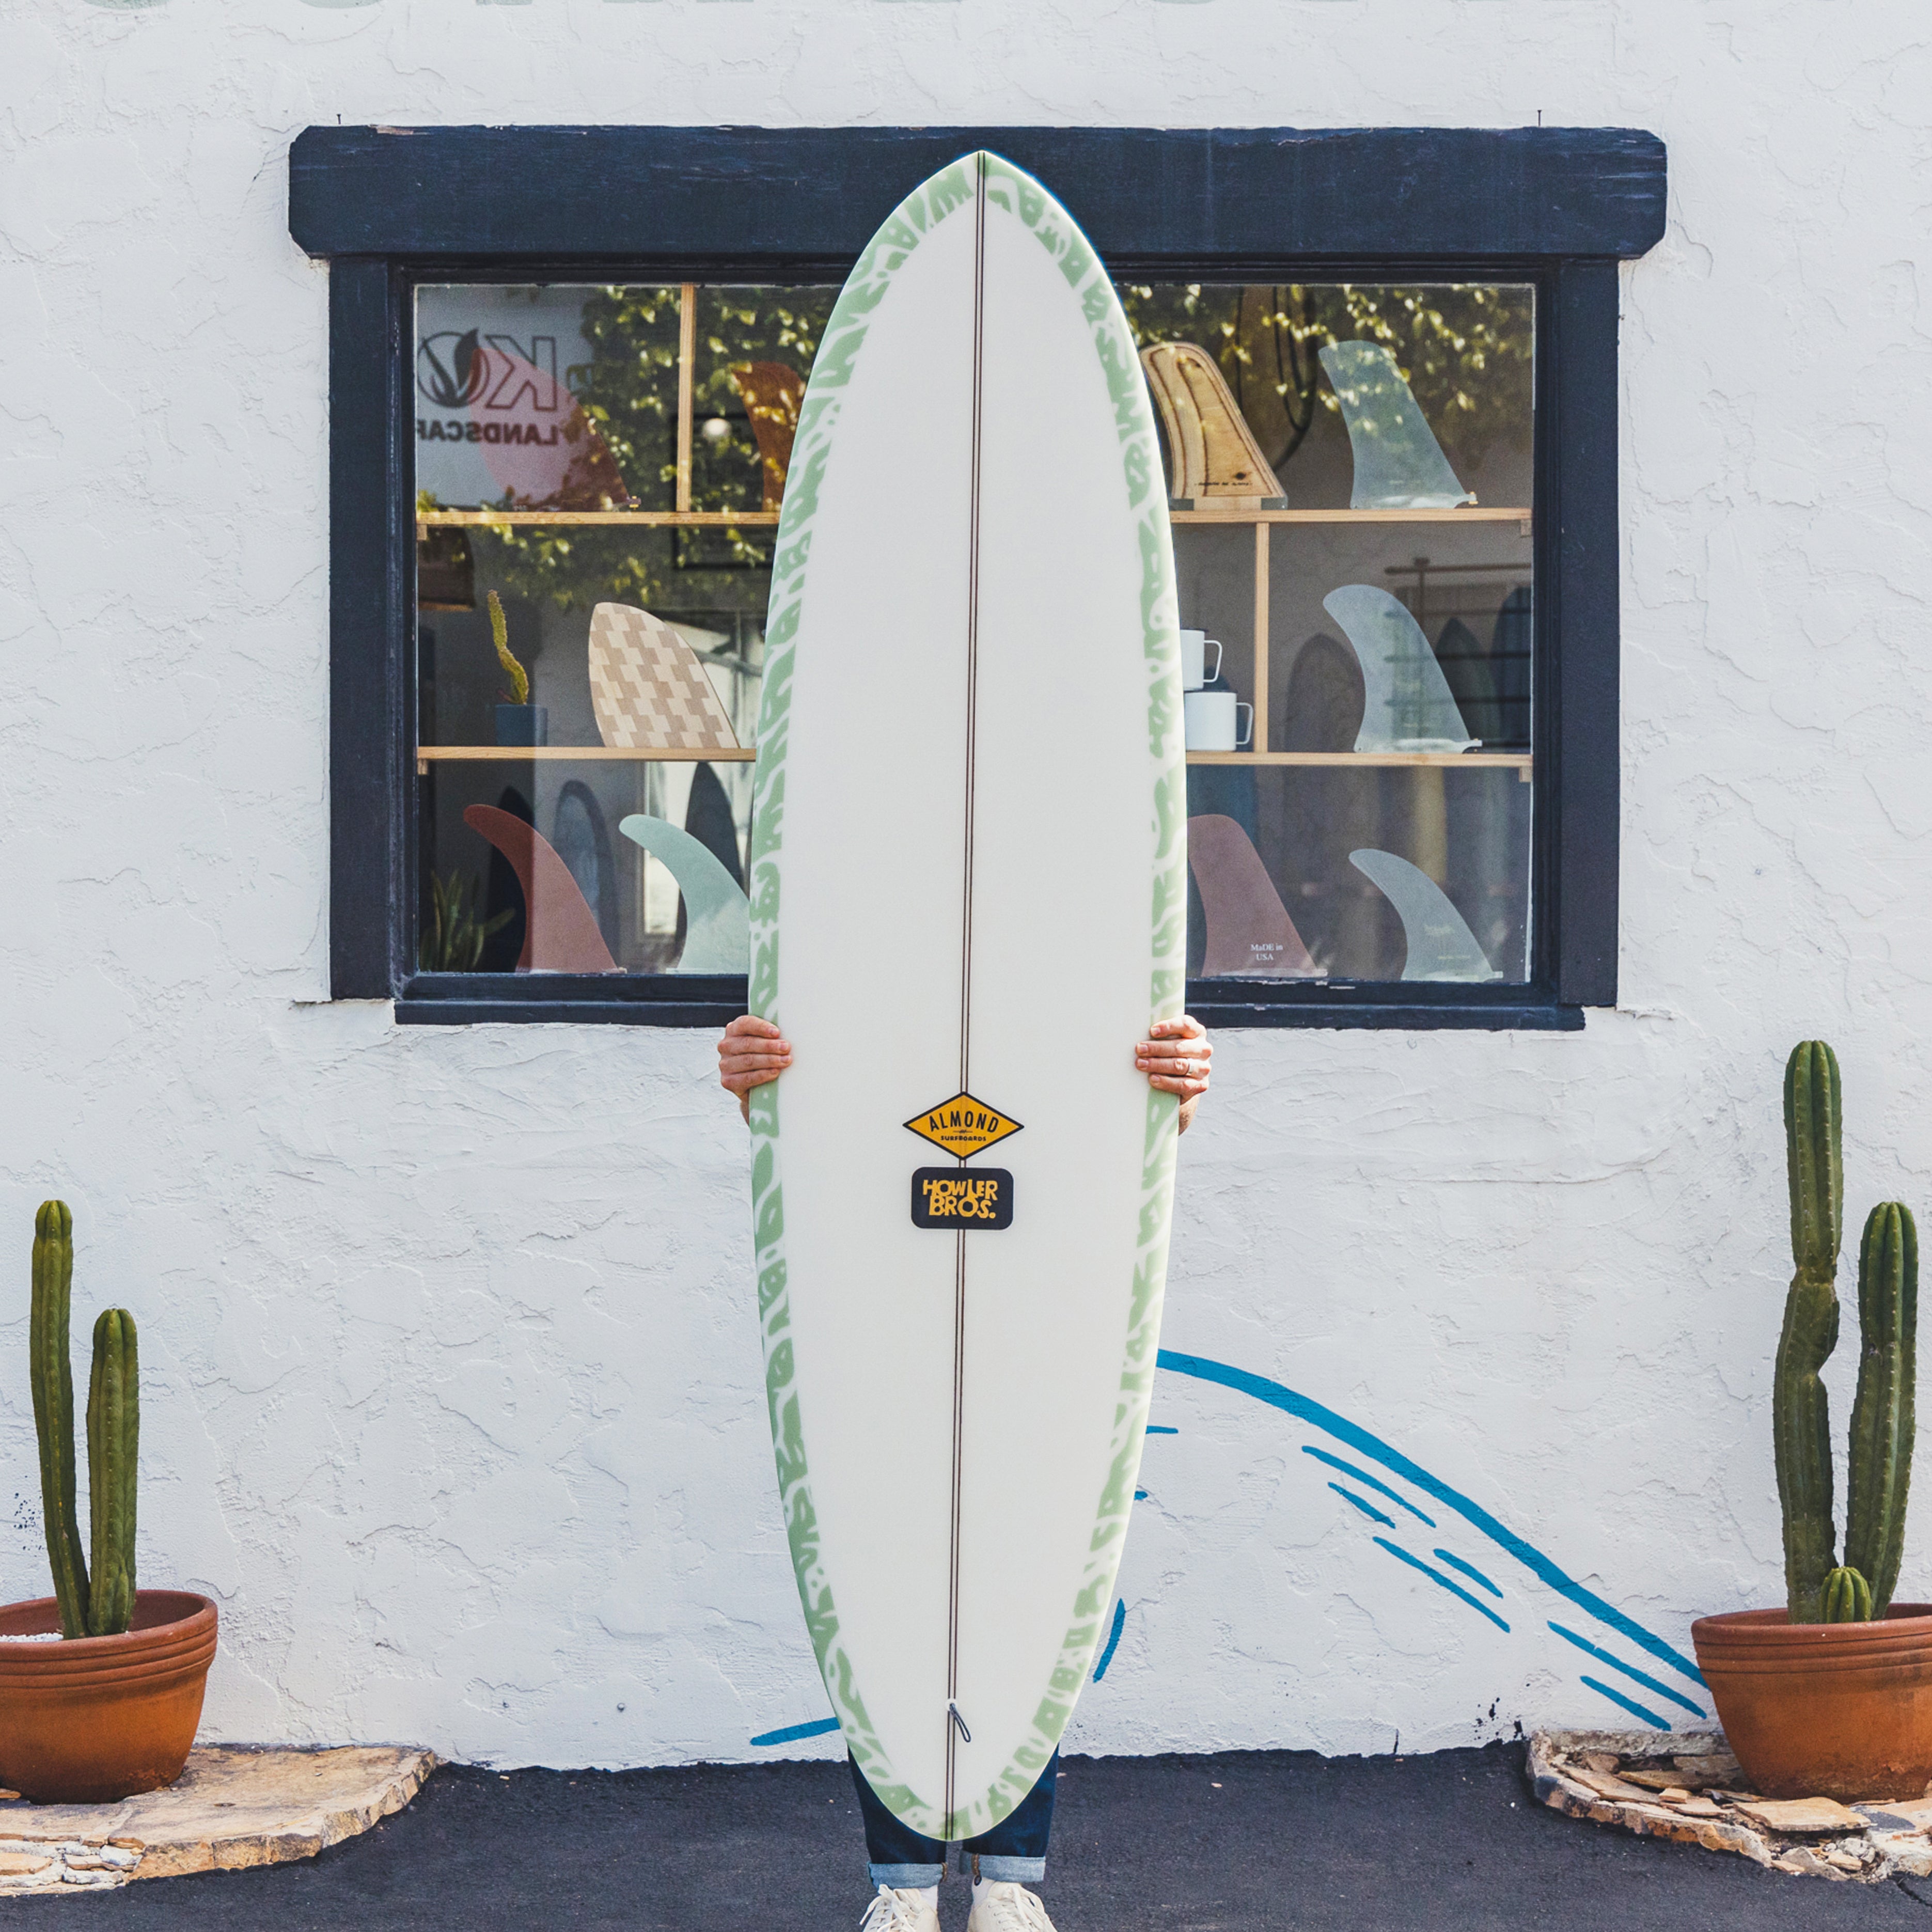 Almond surfboards 5'6\